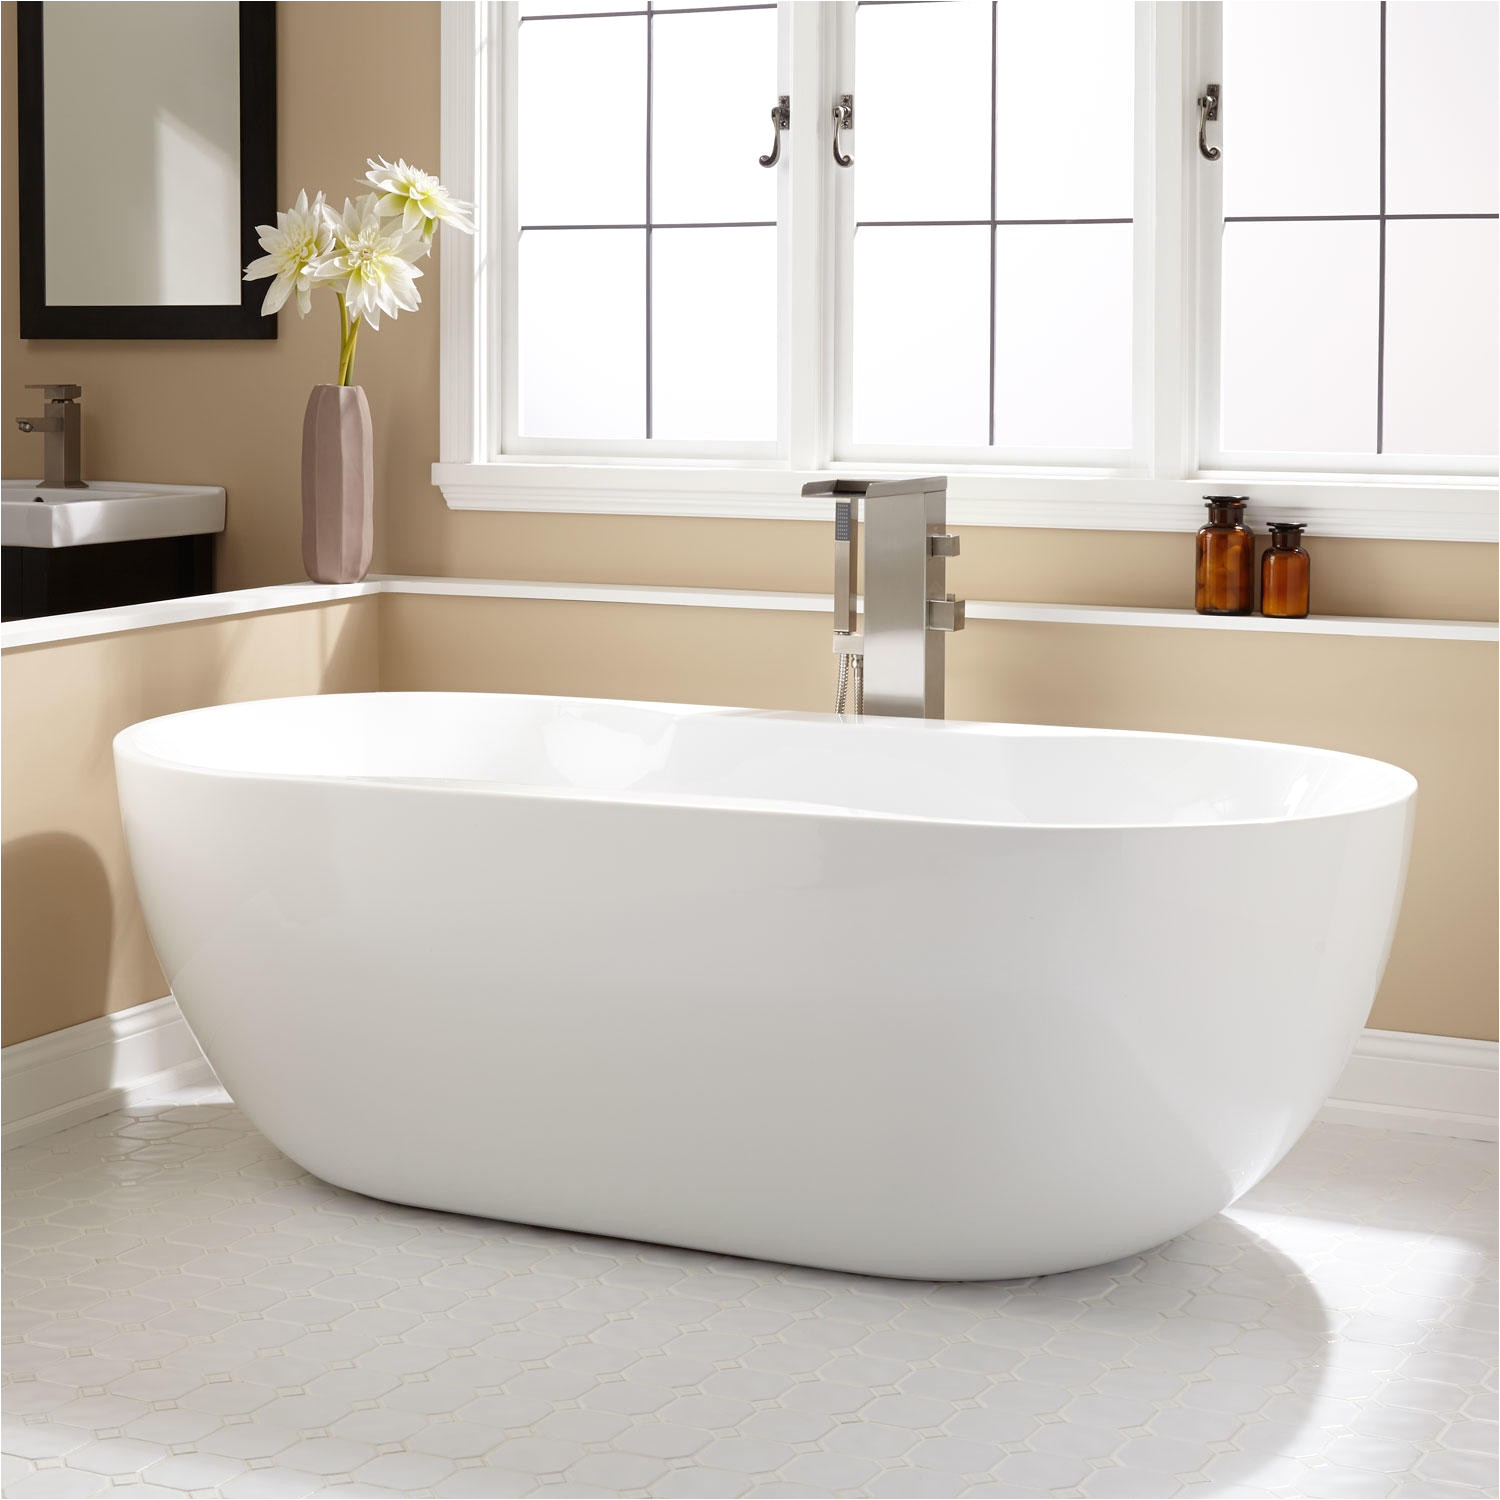 classy stainless steel bathtub for bathroom design